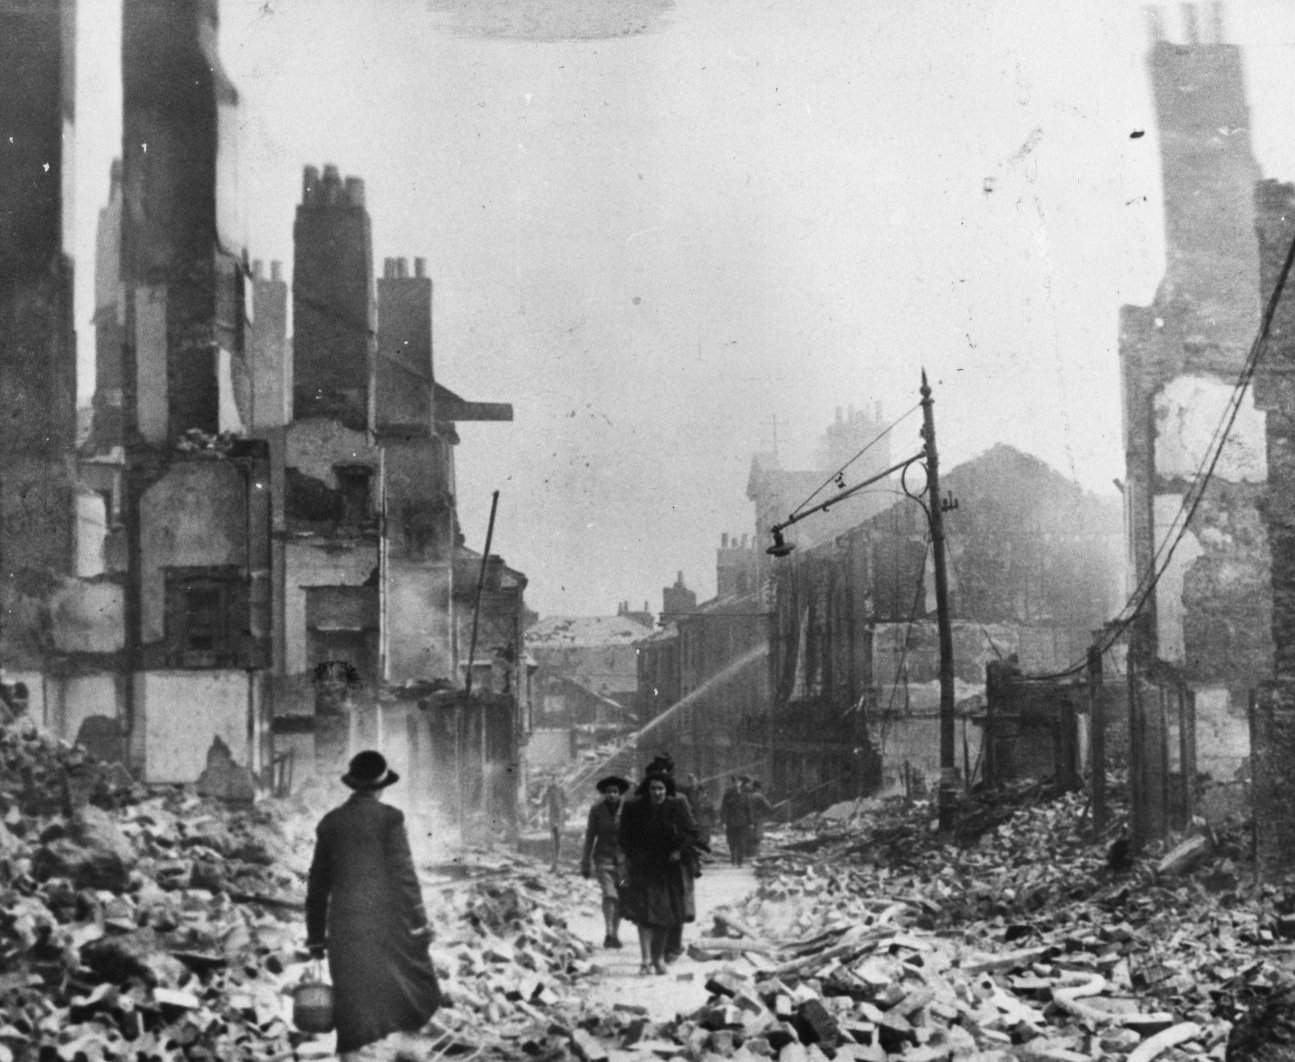 Family memories of the Exeter Blitz of 1942